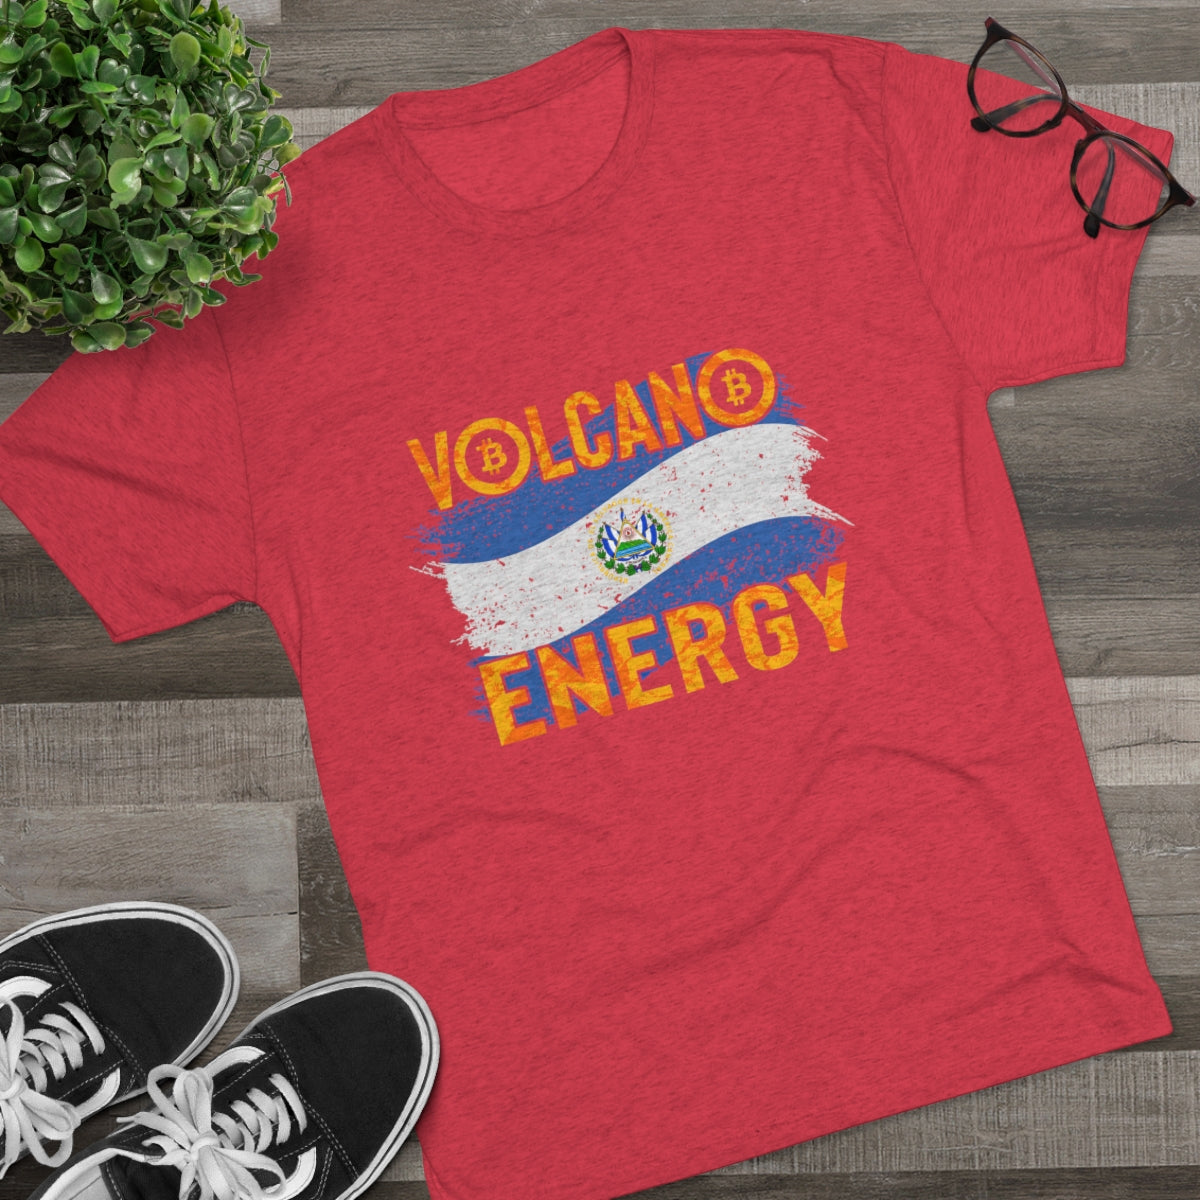 Volcano Energy  2.0 Tee